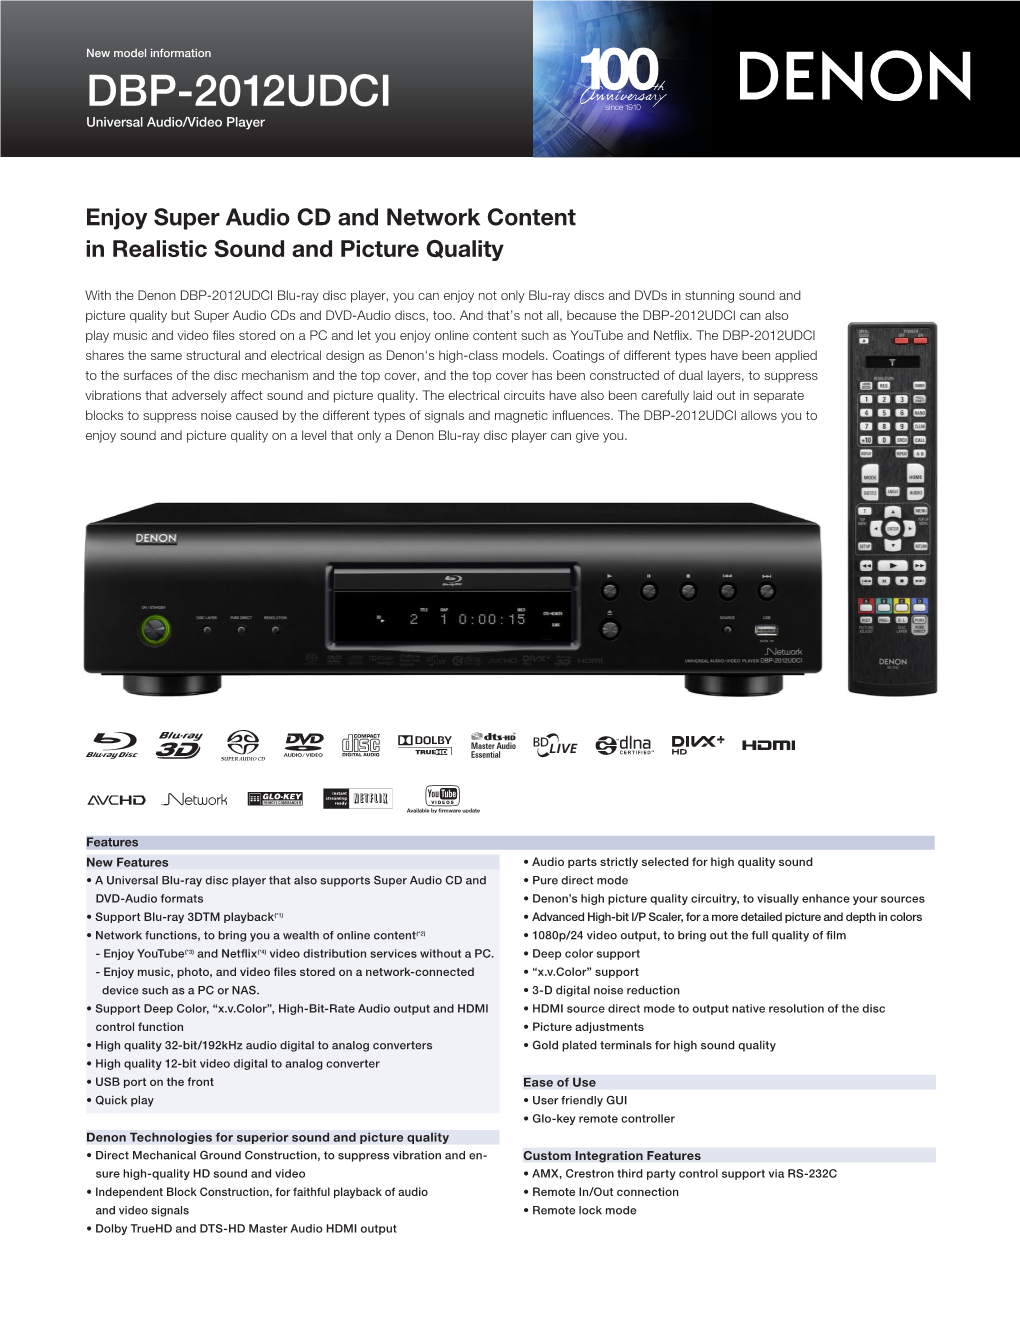 DBP-2012UDCI Universal Audio/Video Player